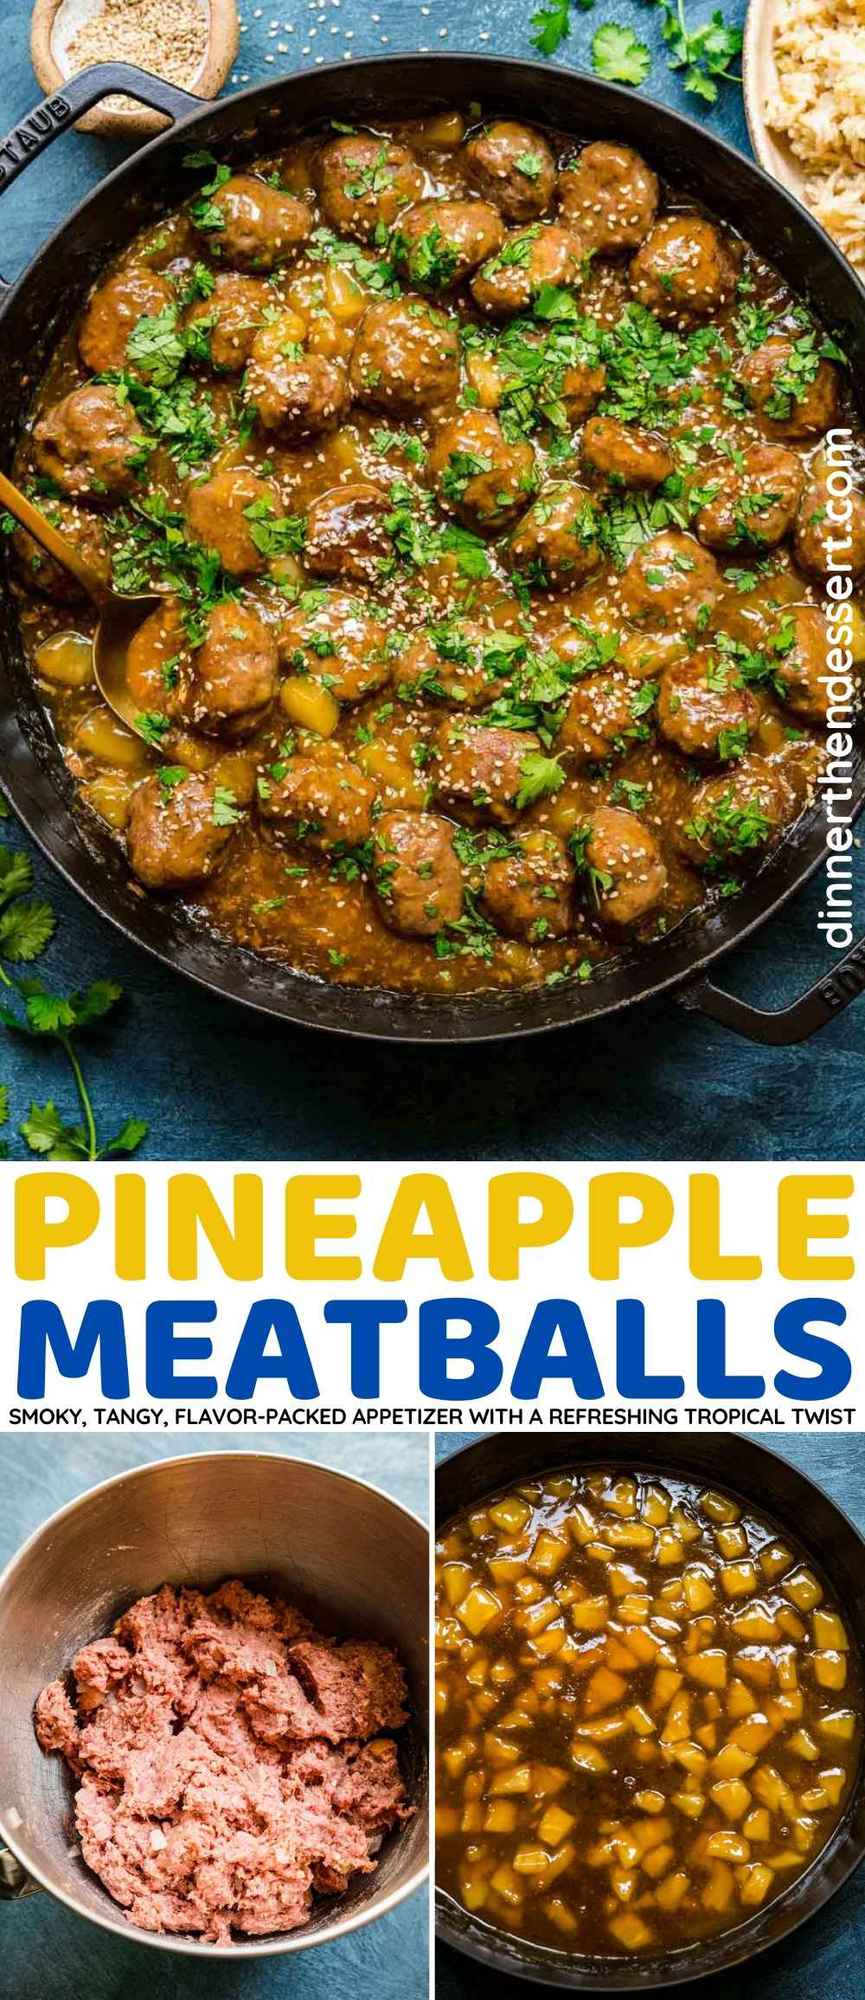 Pineapple Meatballs collage